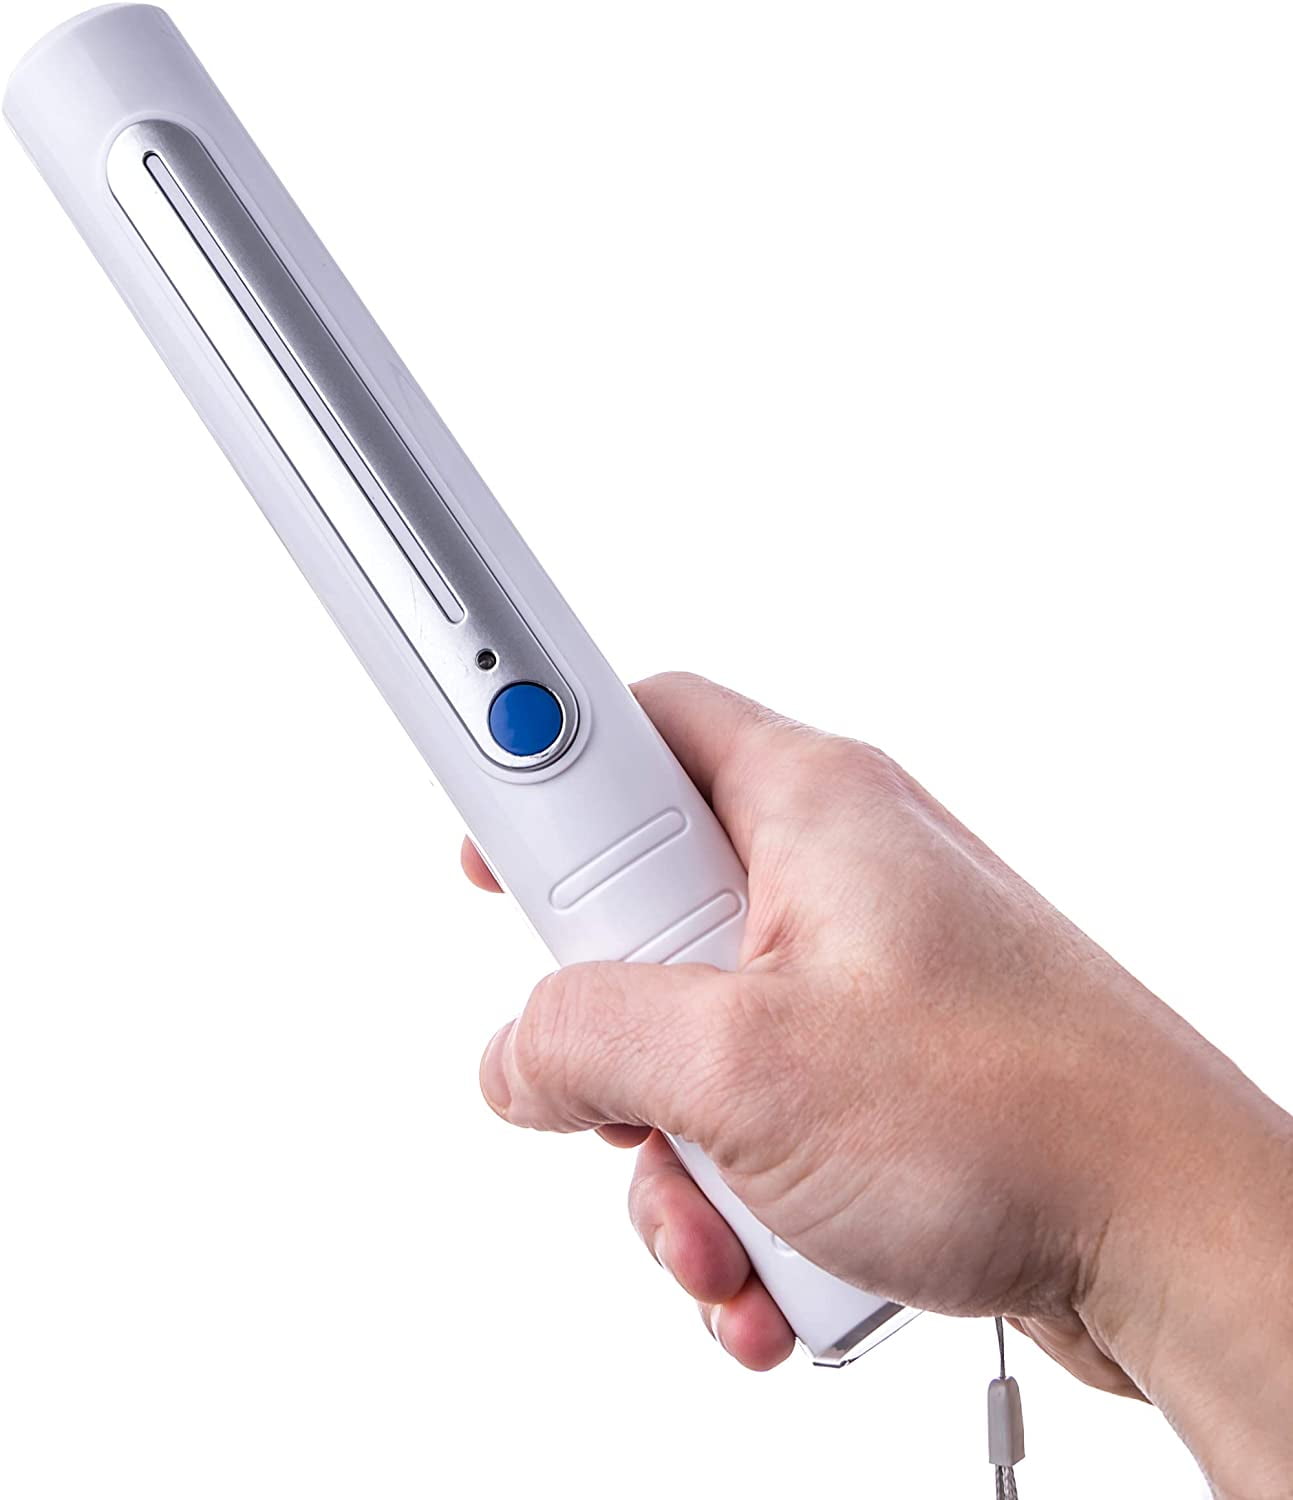 HandyBox UV-C hand sanitizers by Handy Enterprises